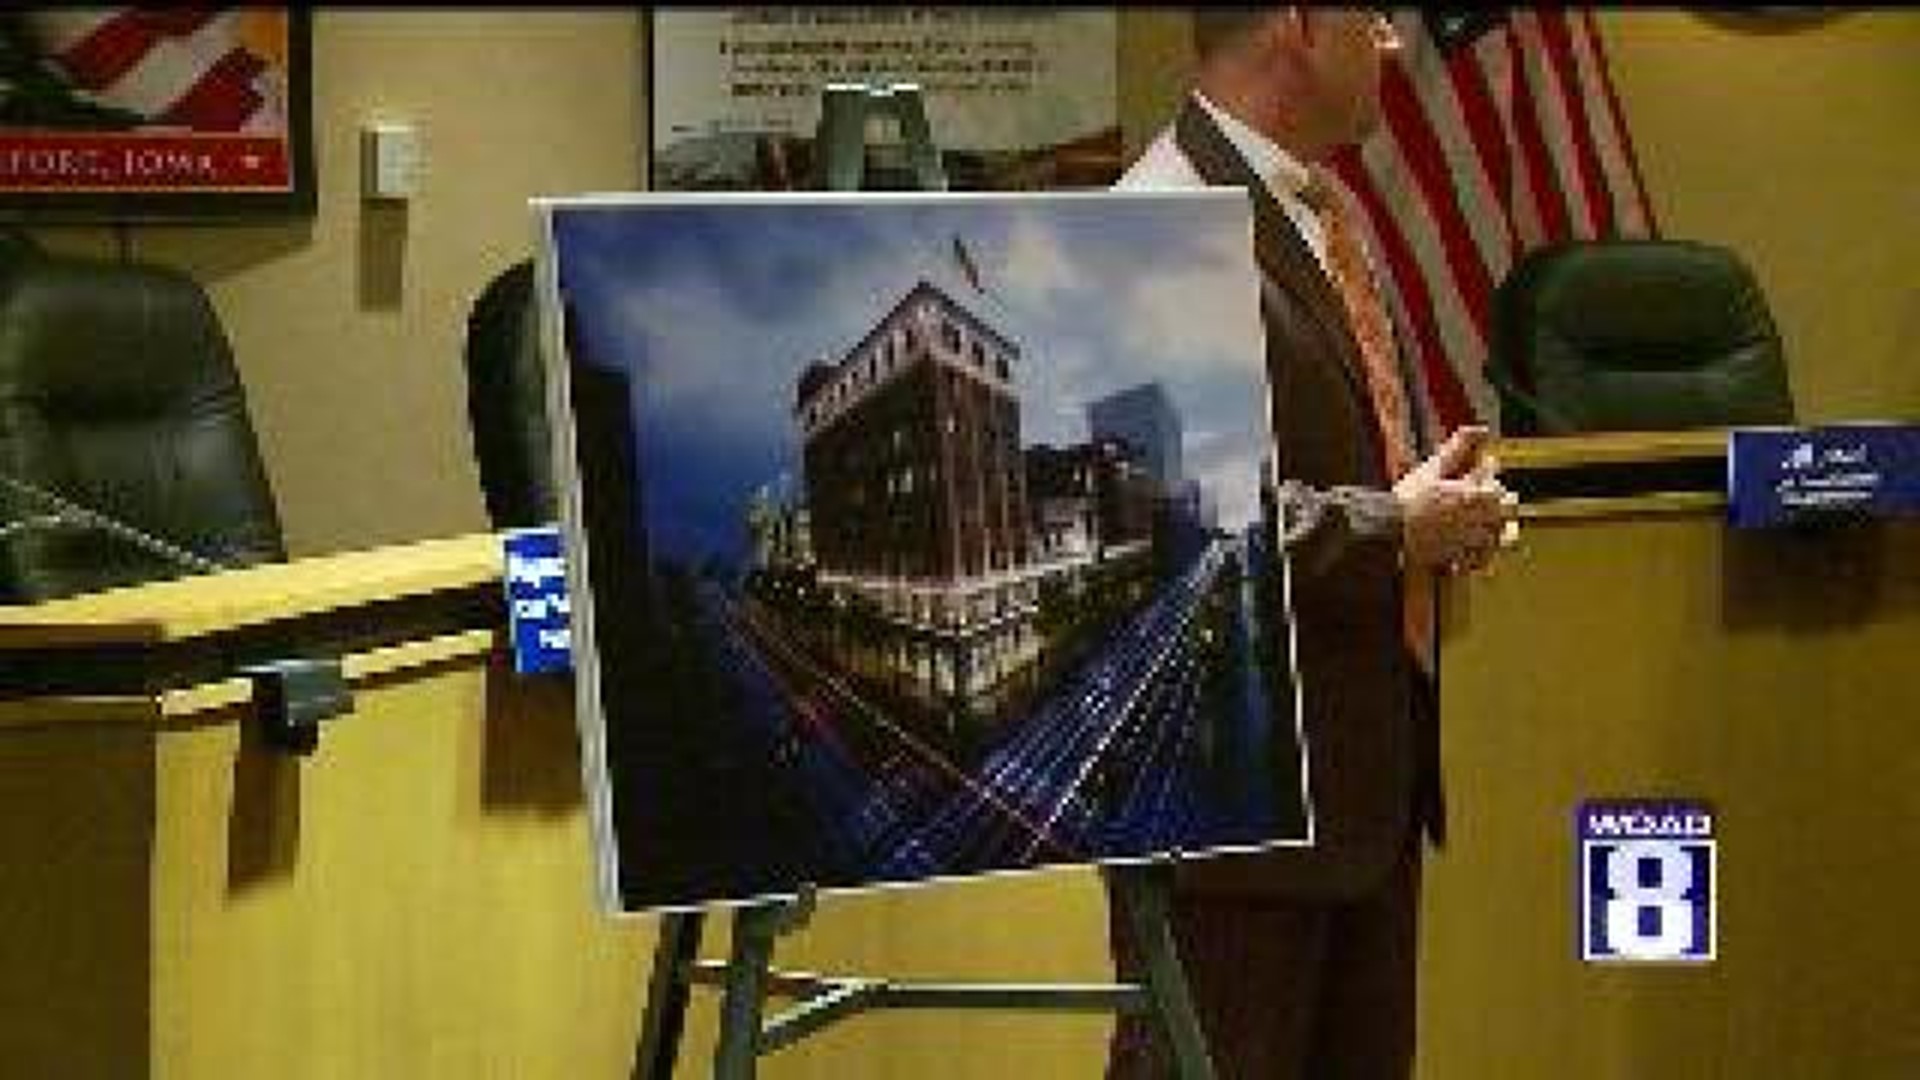 Davenport Receives Three Casino Proposals, Creative Developments